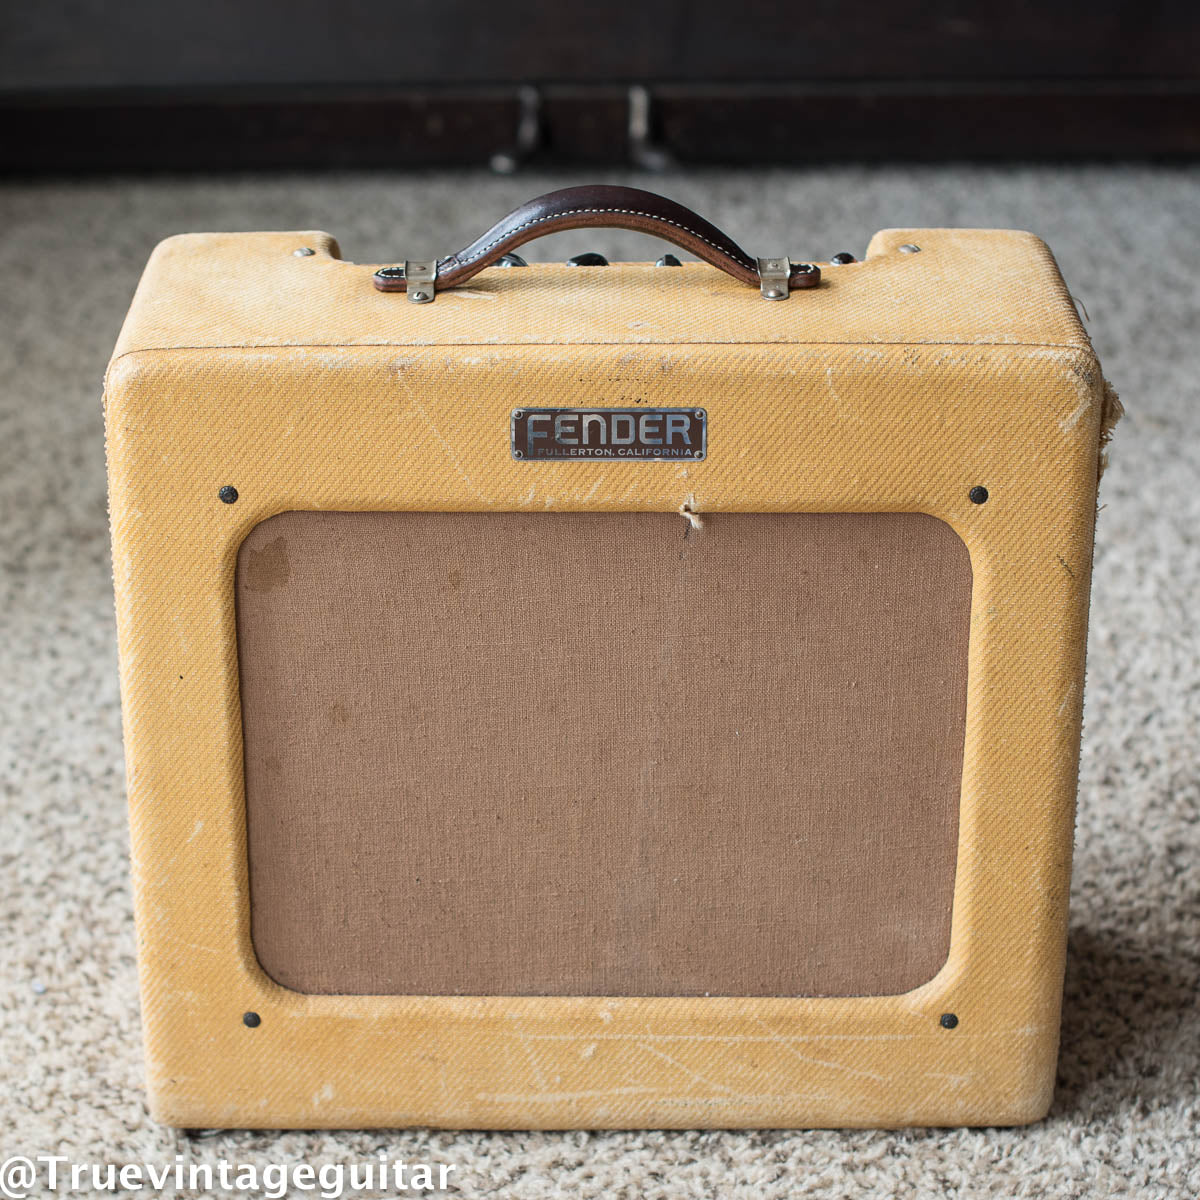 1950 Fender Deluxe Amp tweed vintage guitar amplifier